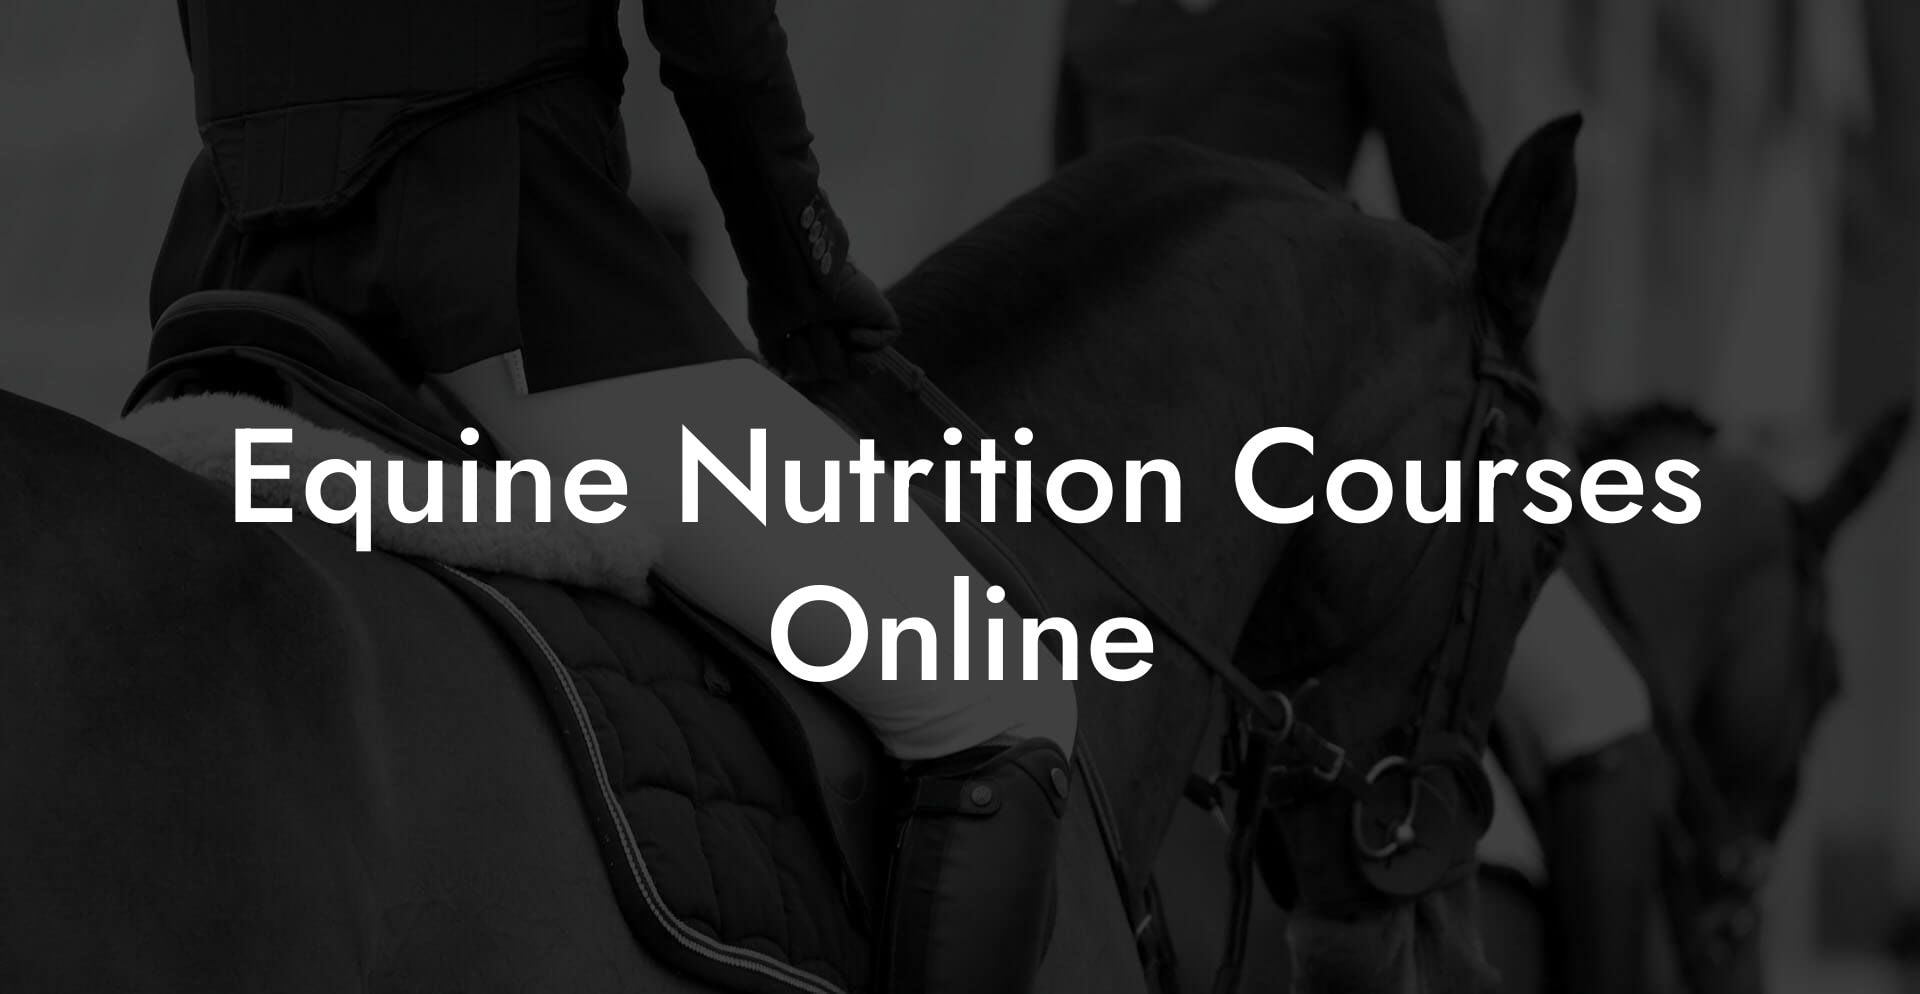 Equine Nutrition Courses Online